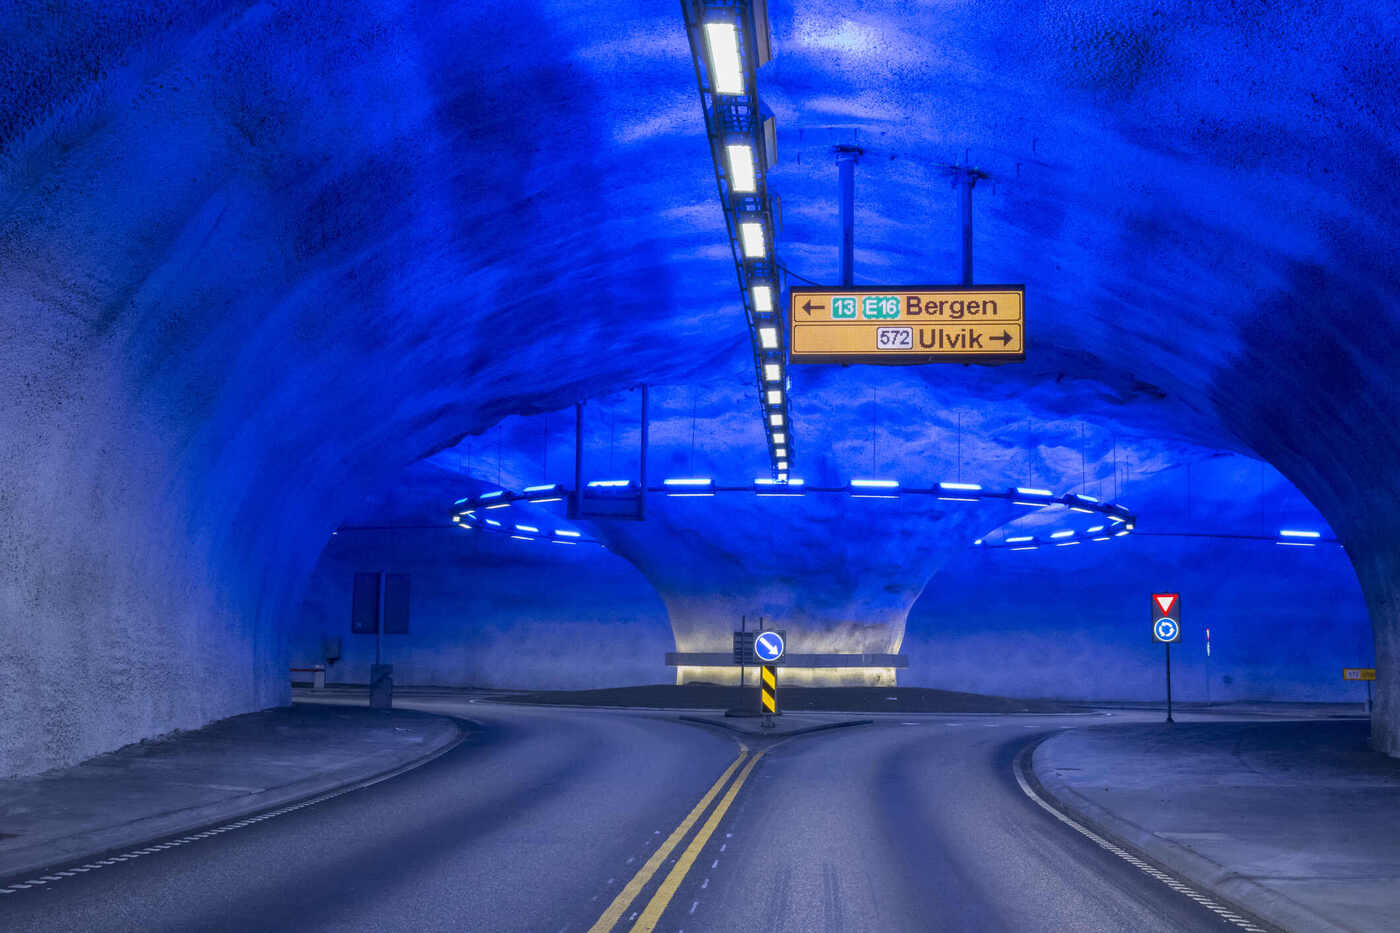 tunel laerdal noruega